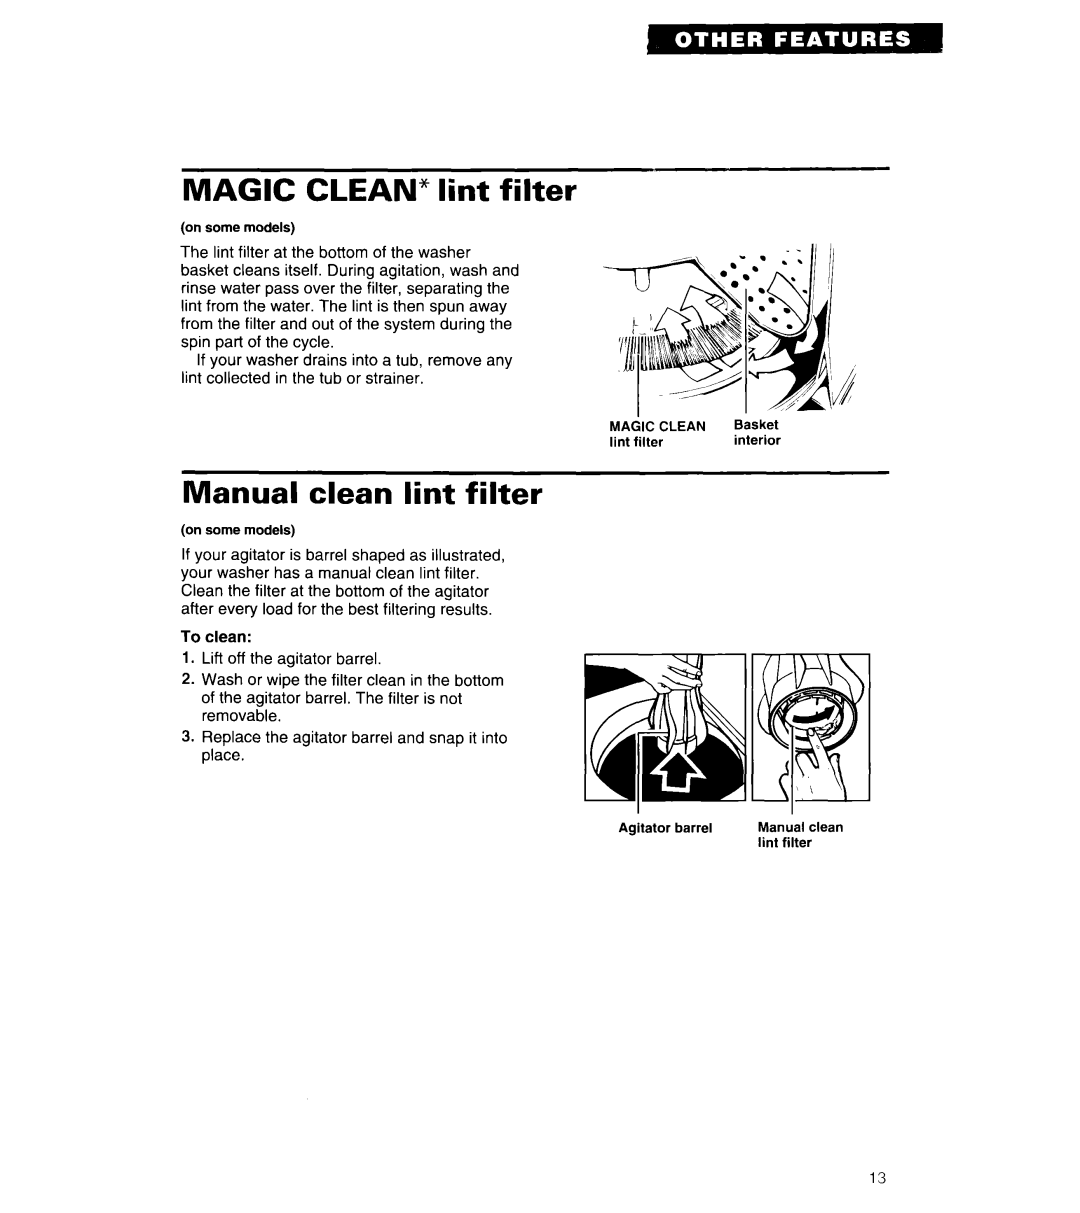 Whirlpool 3360461 warranty MAGIC CLEAN* lint filter, Manual clean lint filter 